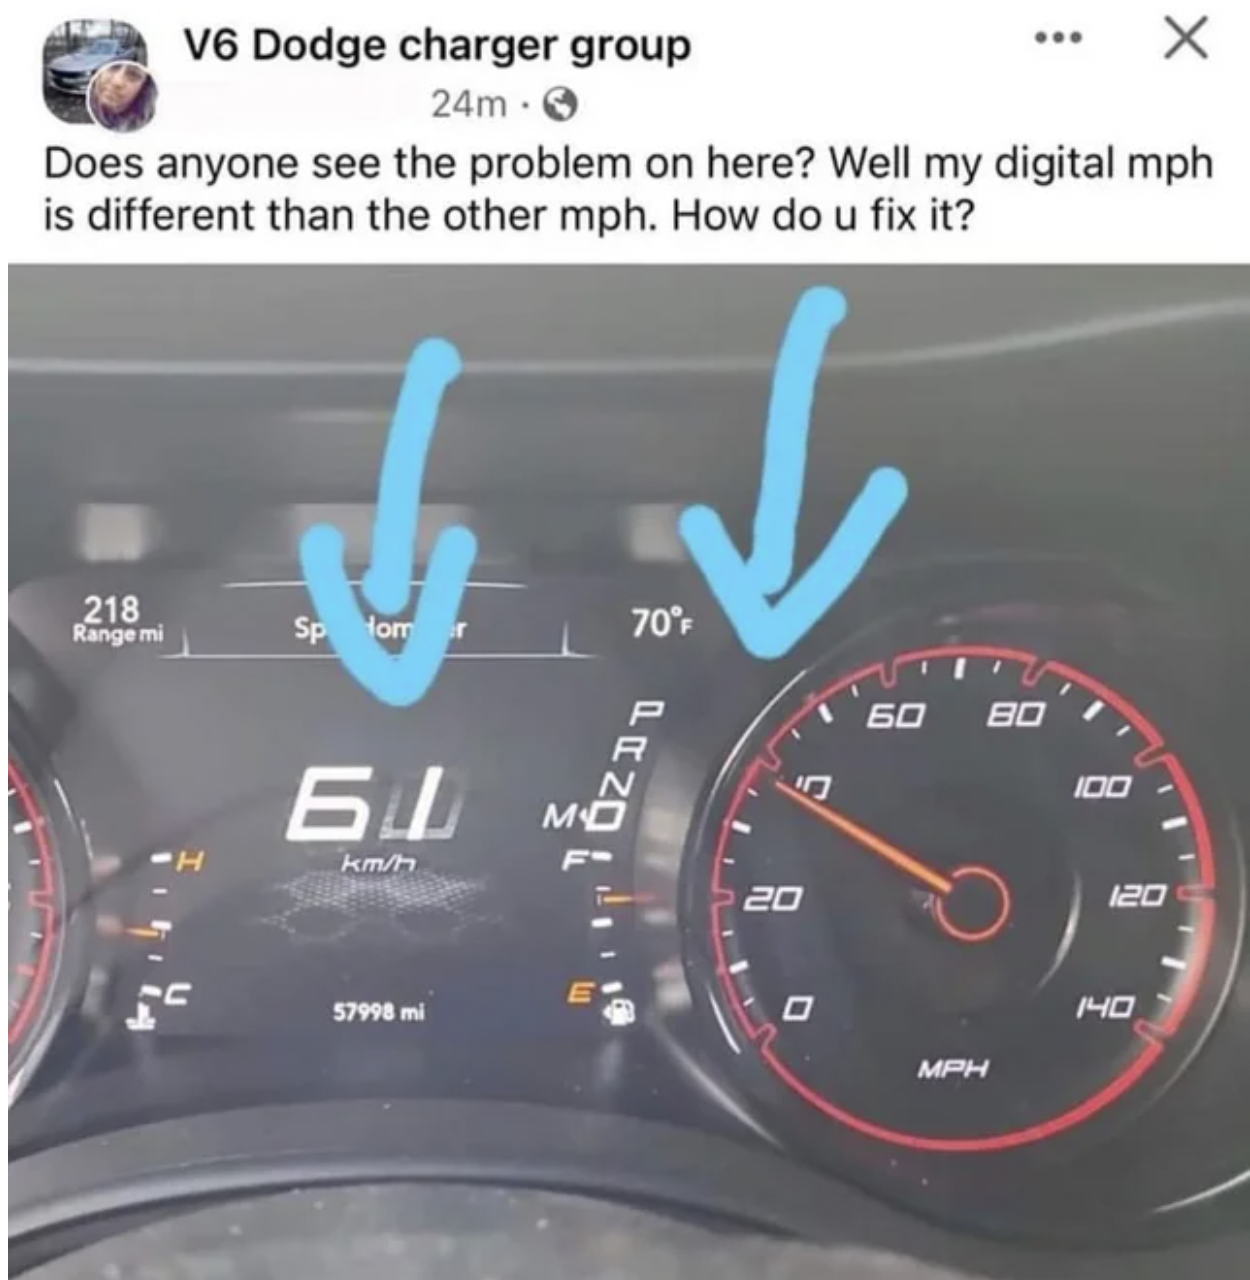 speedometer - V6 Dodge charger group